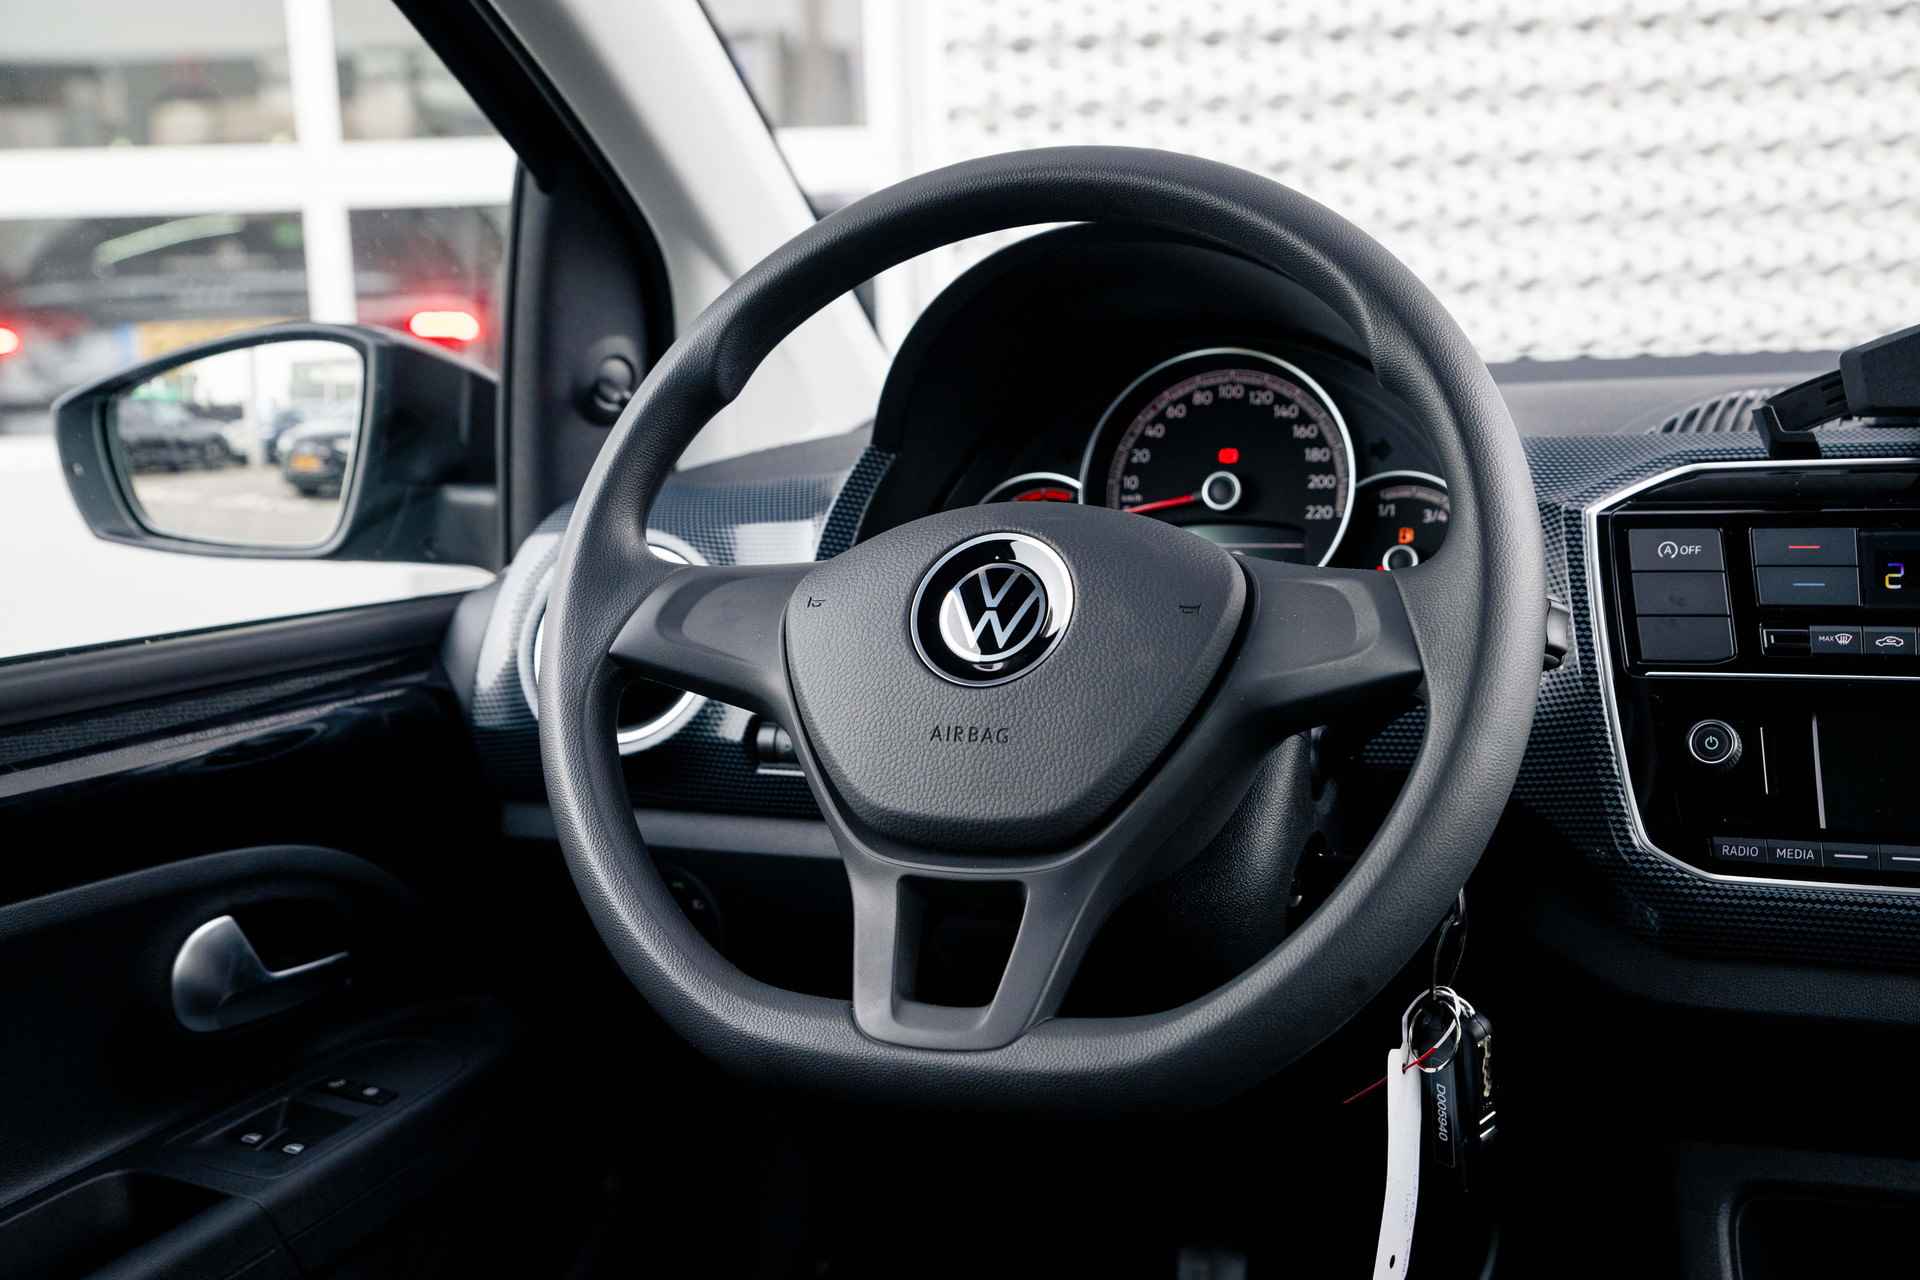 Volkswagen up! 1.0 MPI 65 5MT up! - 9/29